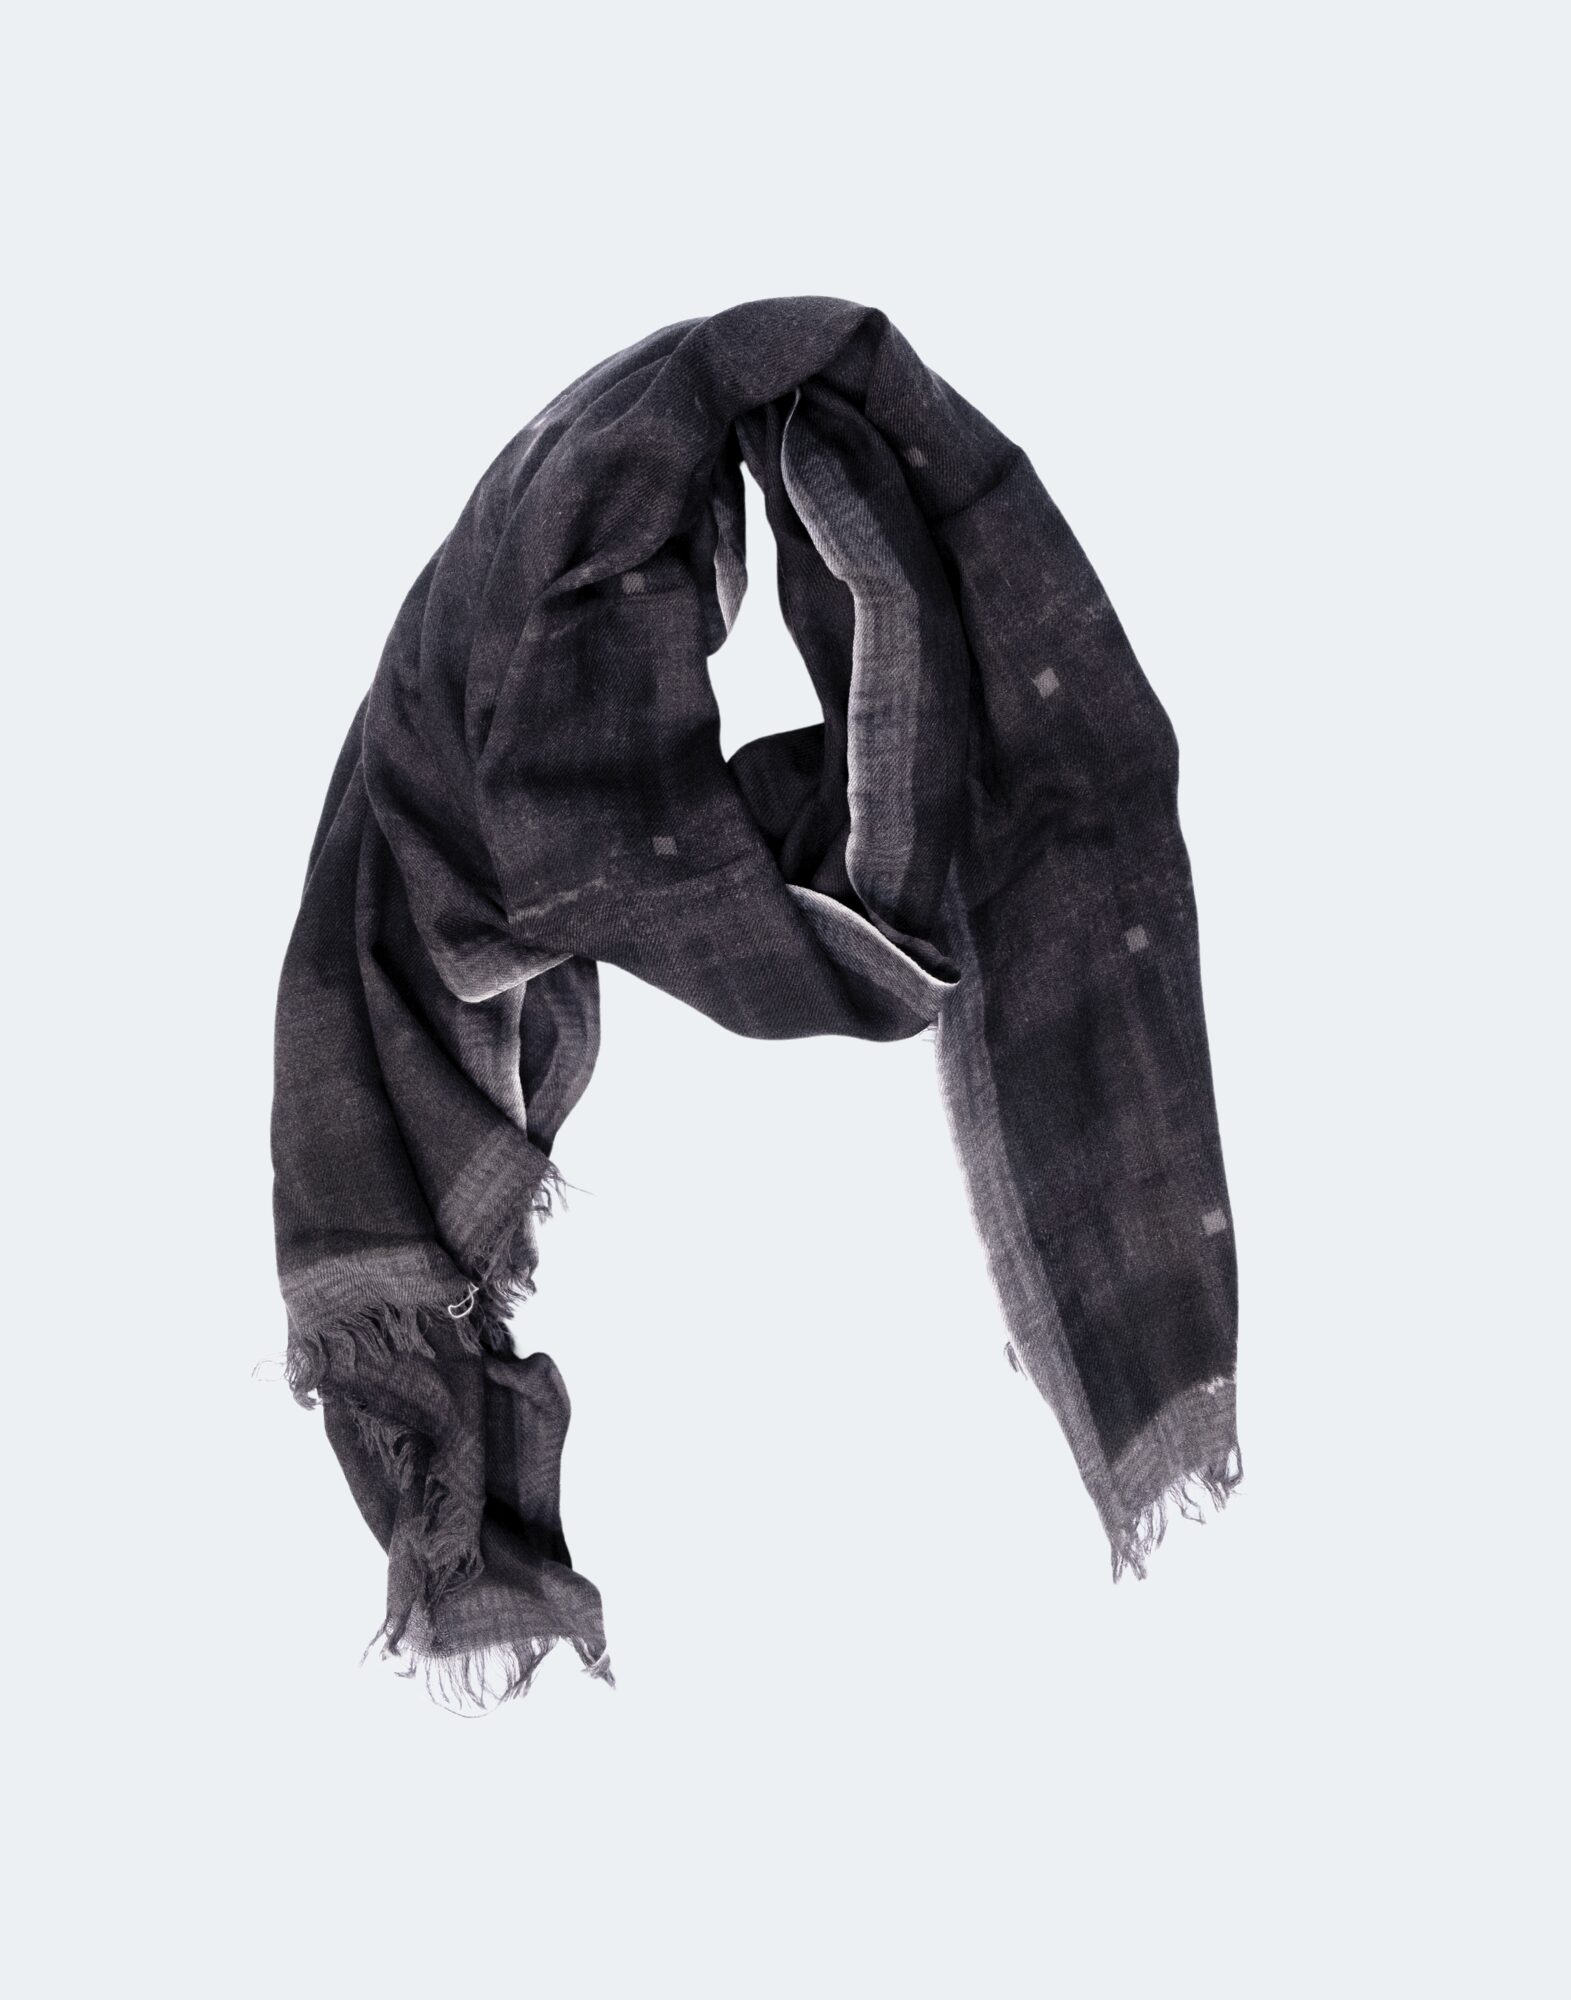 black scarf with small gray checks